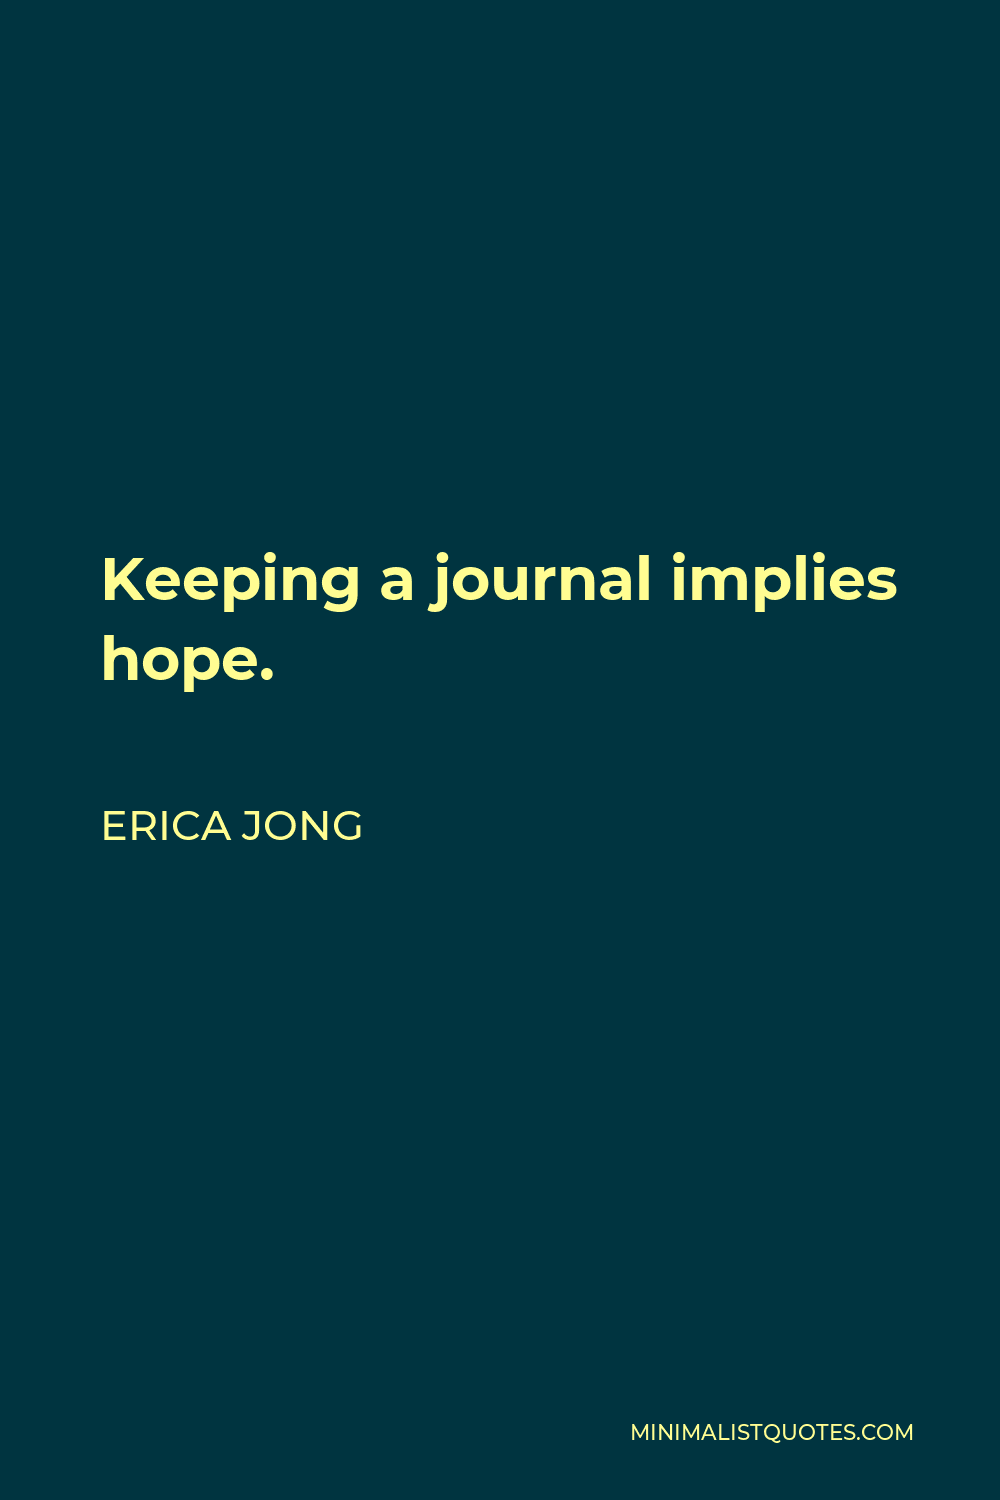 Erica Jong Quote - Keeping a journal implies hope.